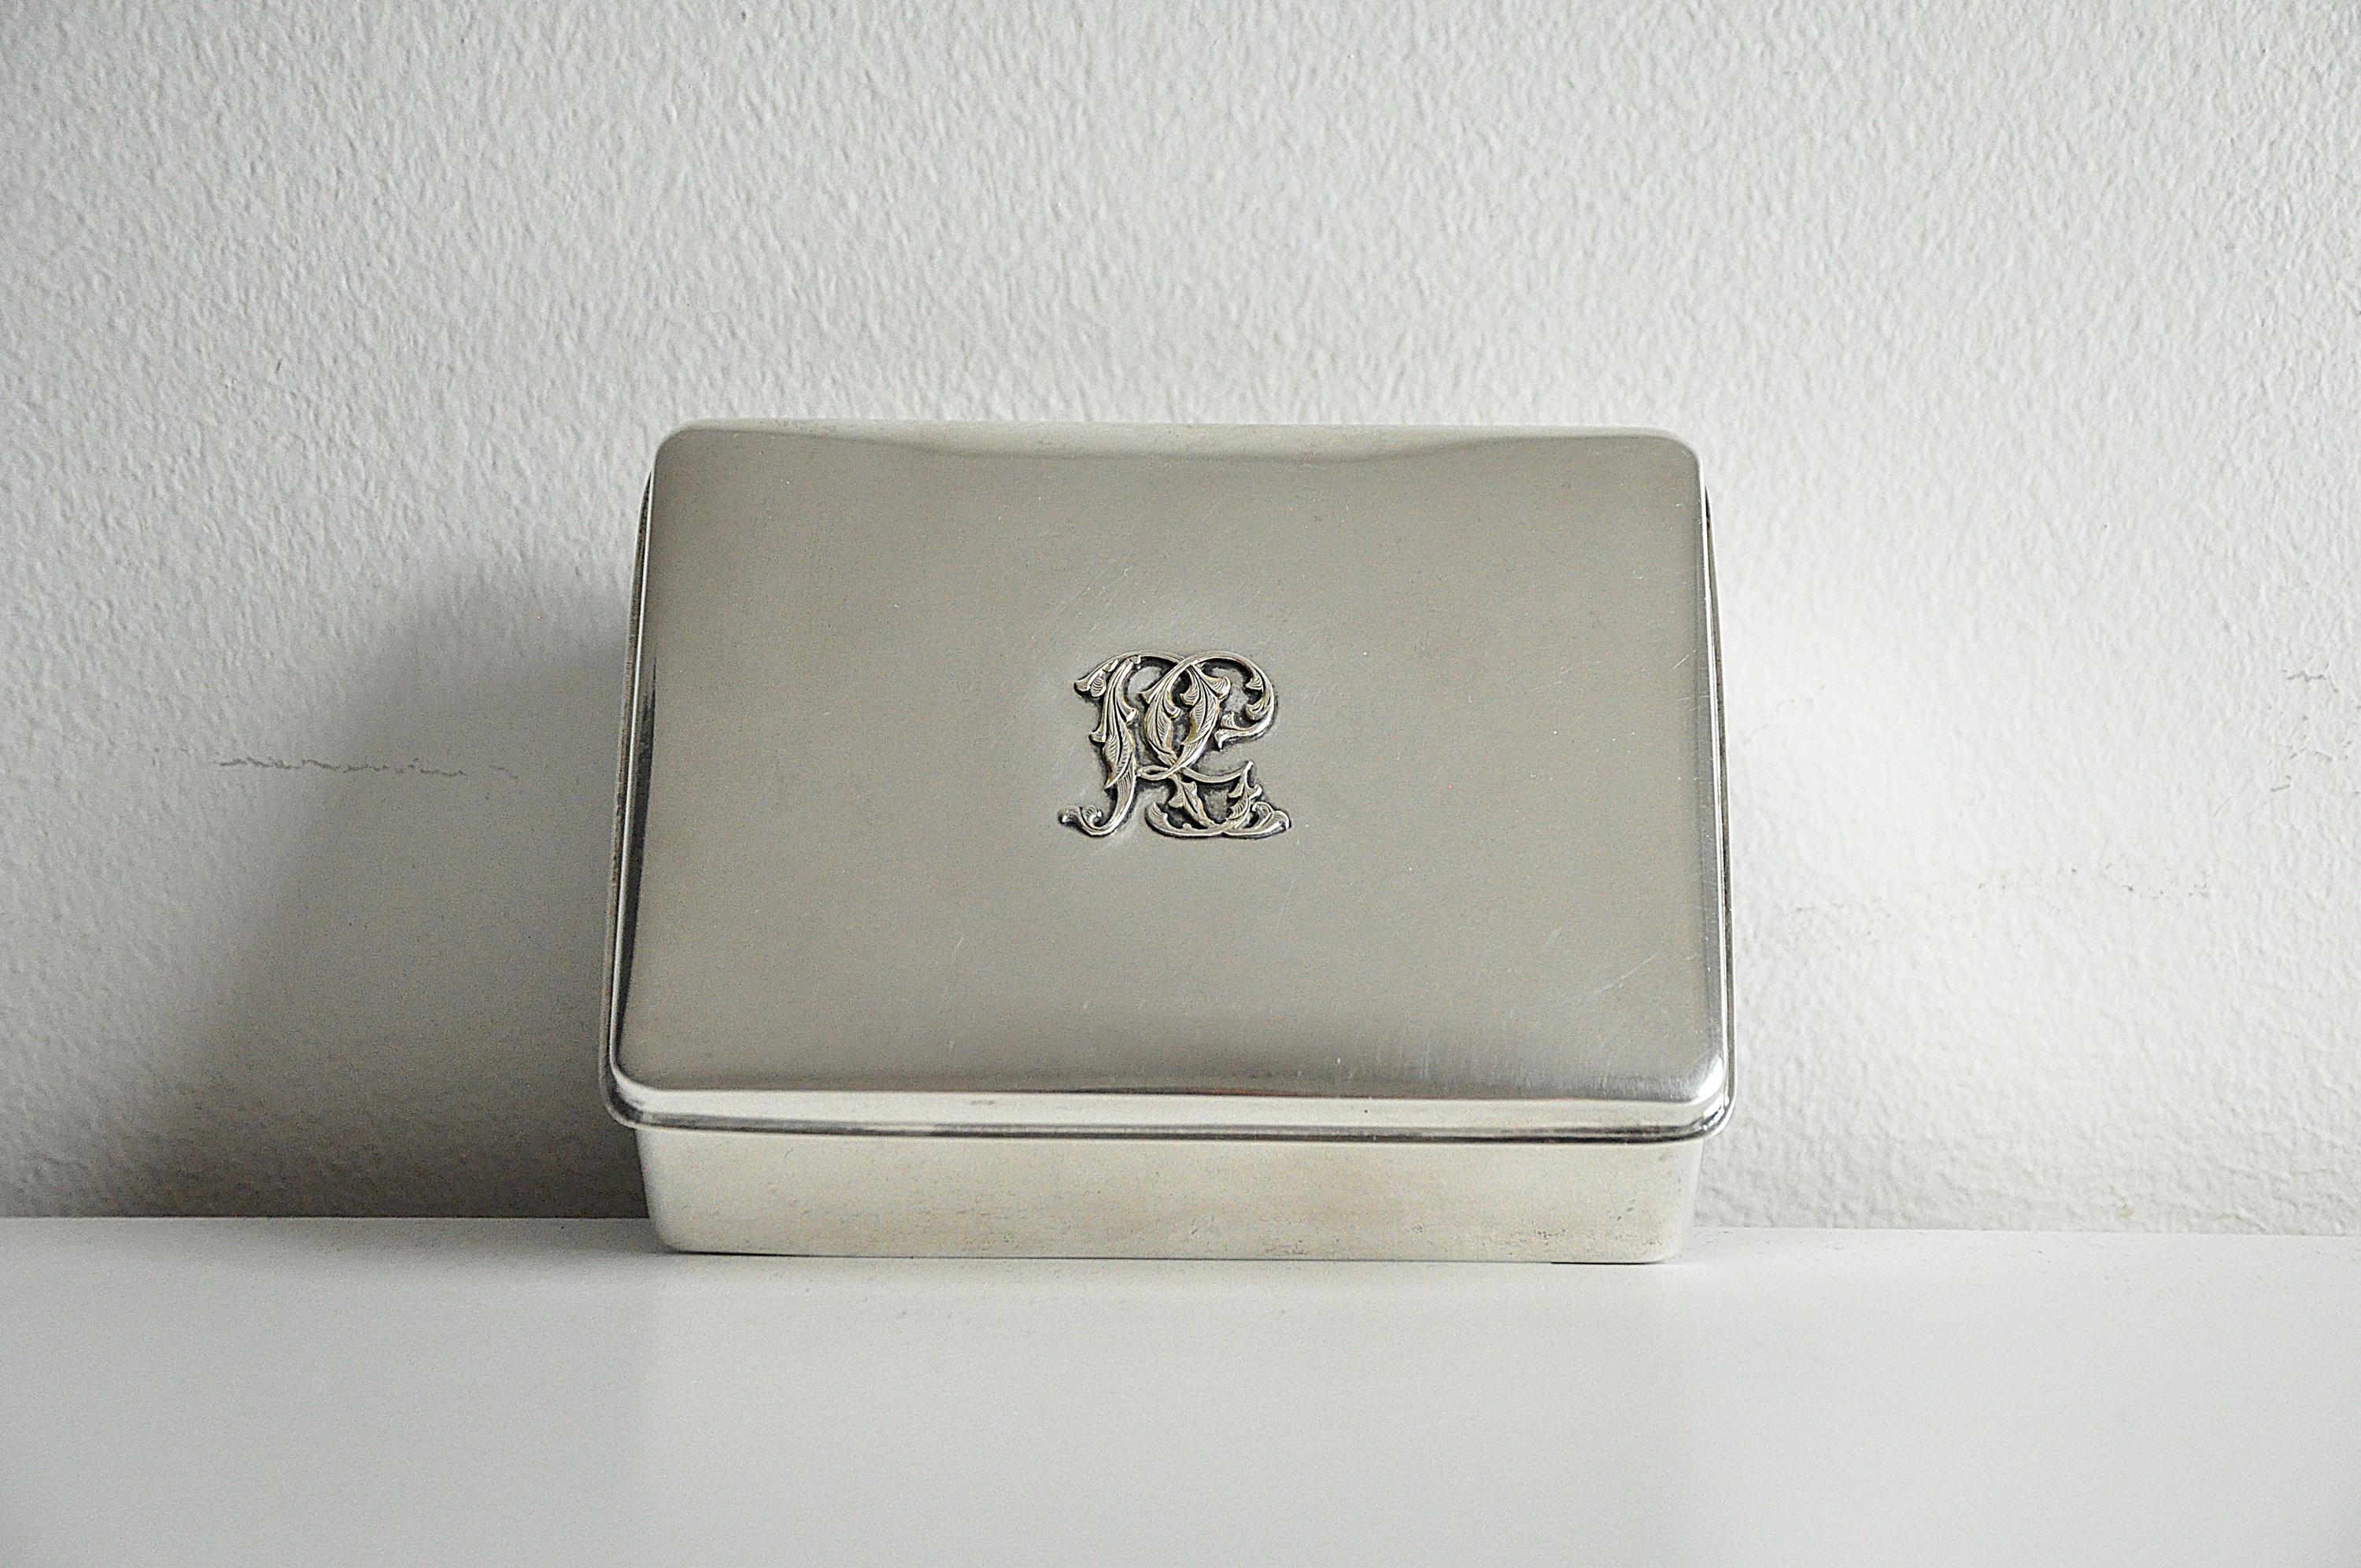 Swedish Scandinavian Modern Silver Box from C. G. Hallberg, Sweden -1937 For Sale